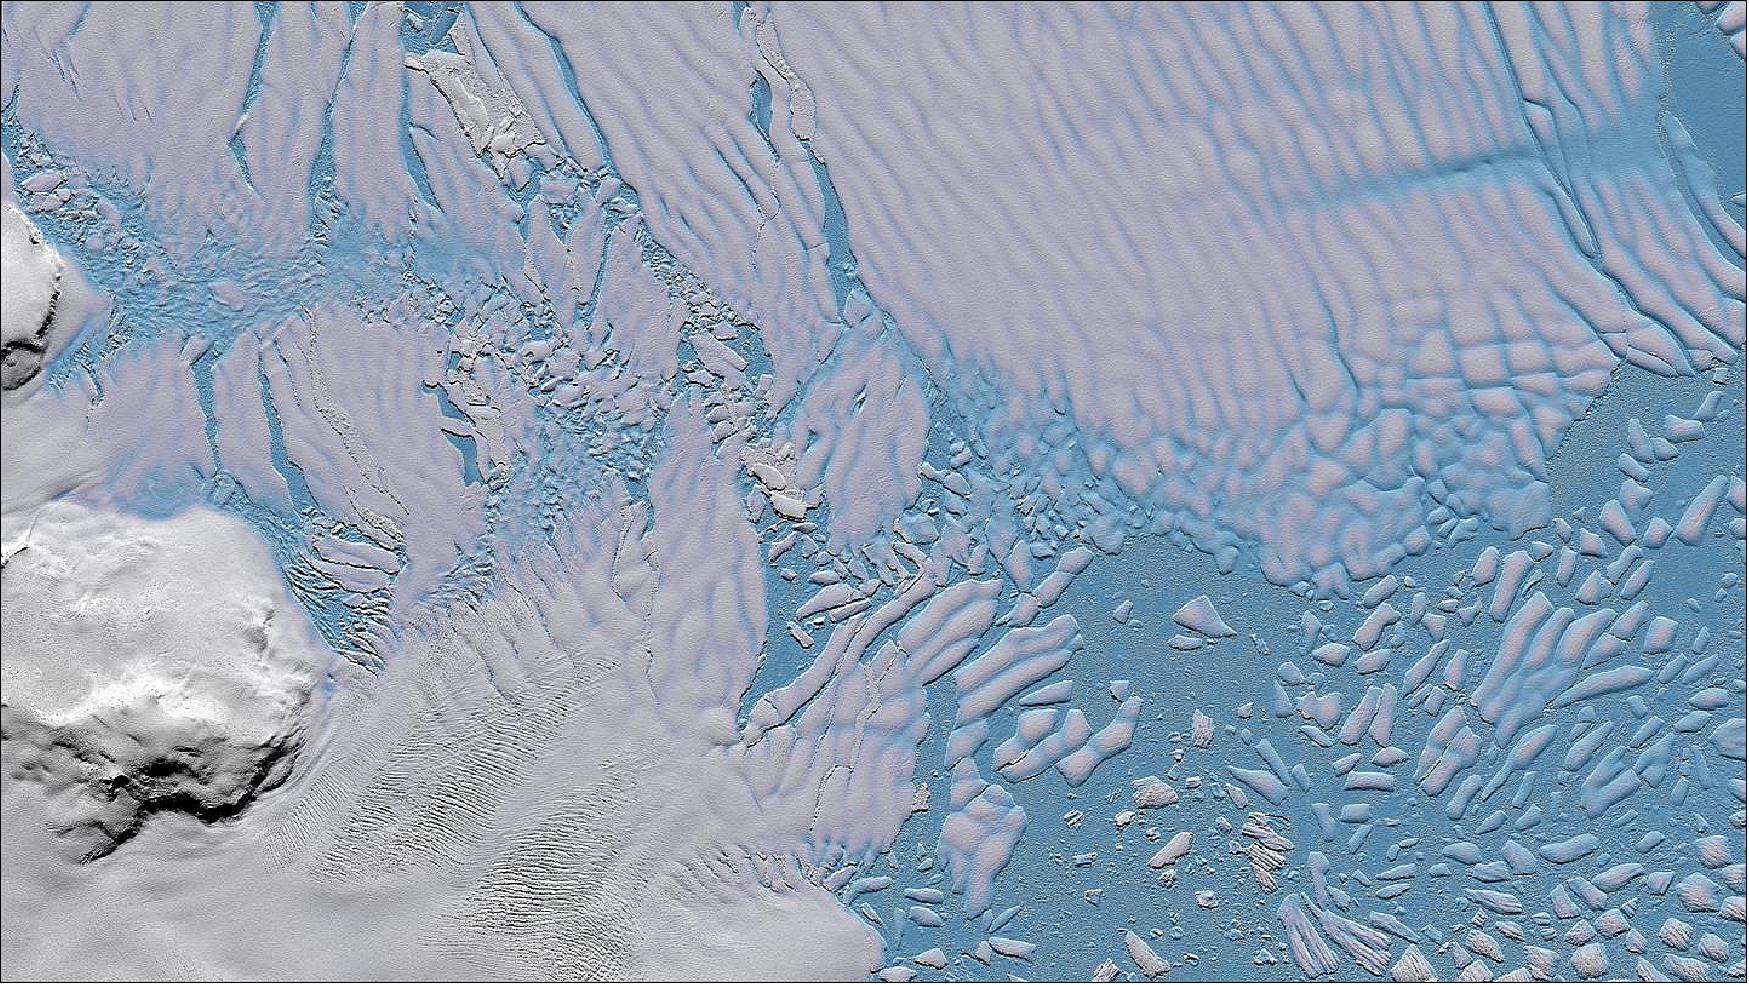 Figure 30: TanDEM-X elevation model -brittle ice shelf of the Thwaites Glacier. For the first time, TanDEM-X elevation models and data from the latest generation of radar satellites enable detailed observation of glacier changes (image credit: DLR, NASA)